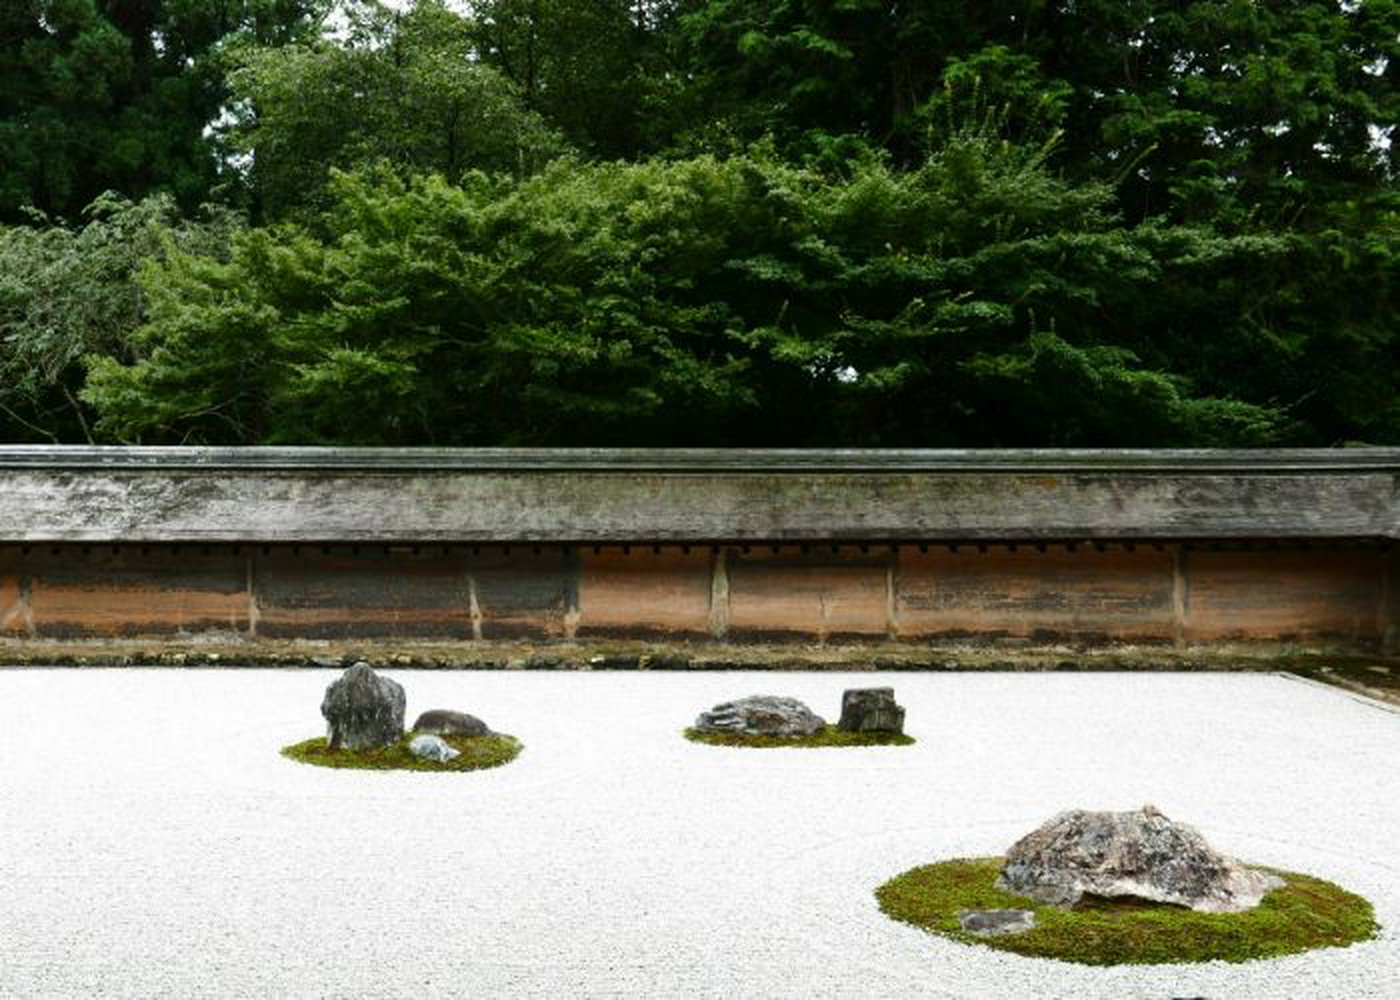 Ryoanji's Zen rock garden, with islands of rocks and moss dotted around the garden.